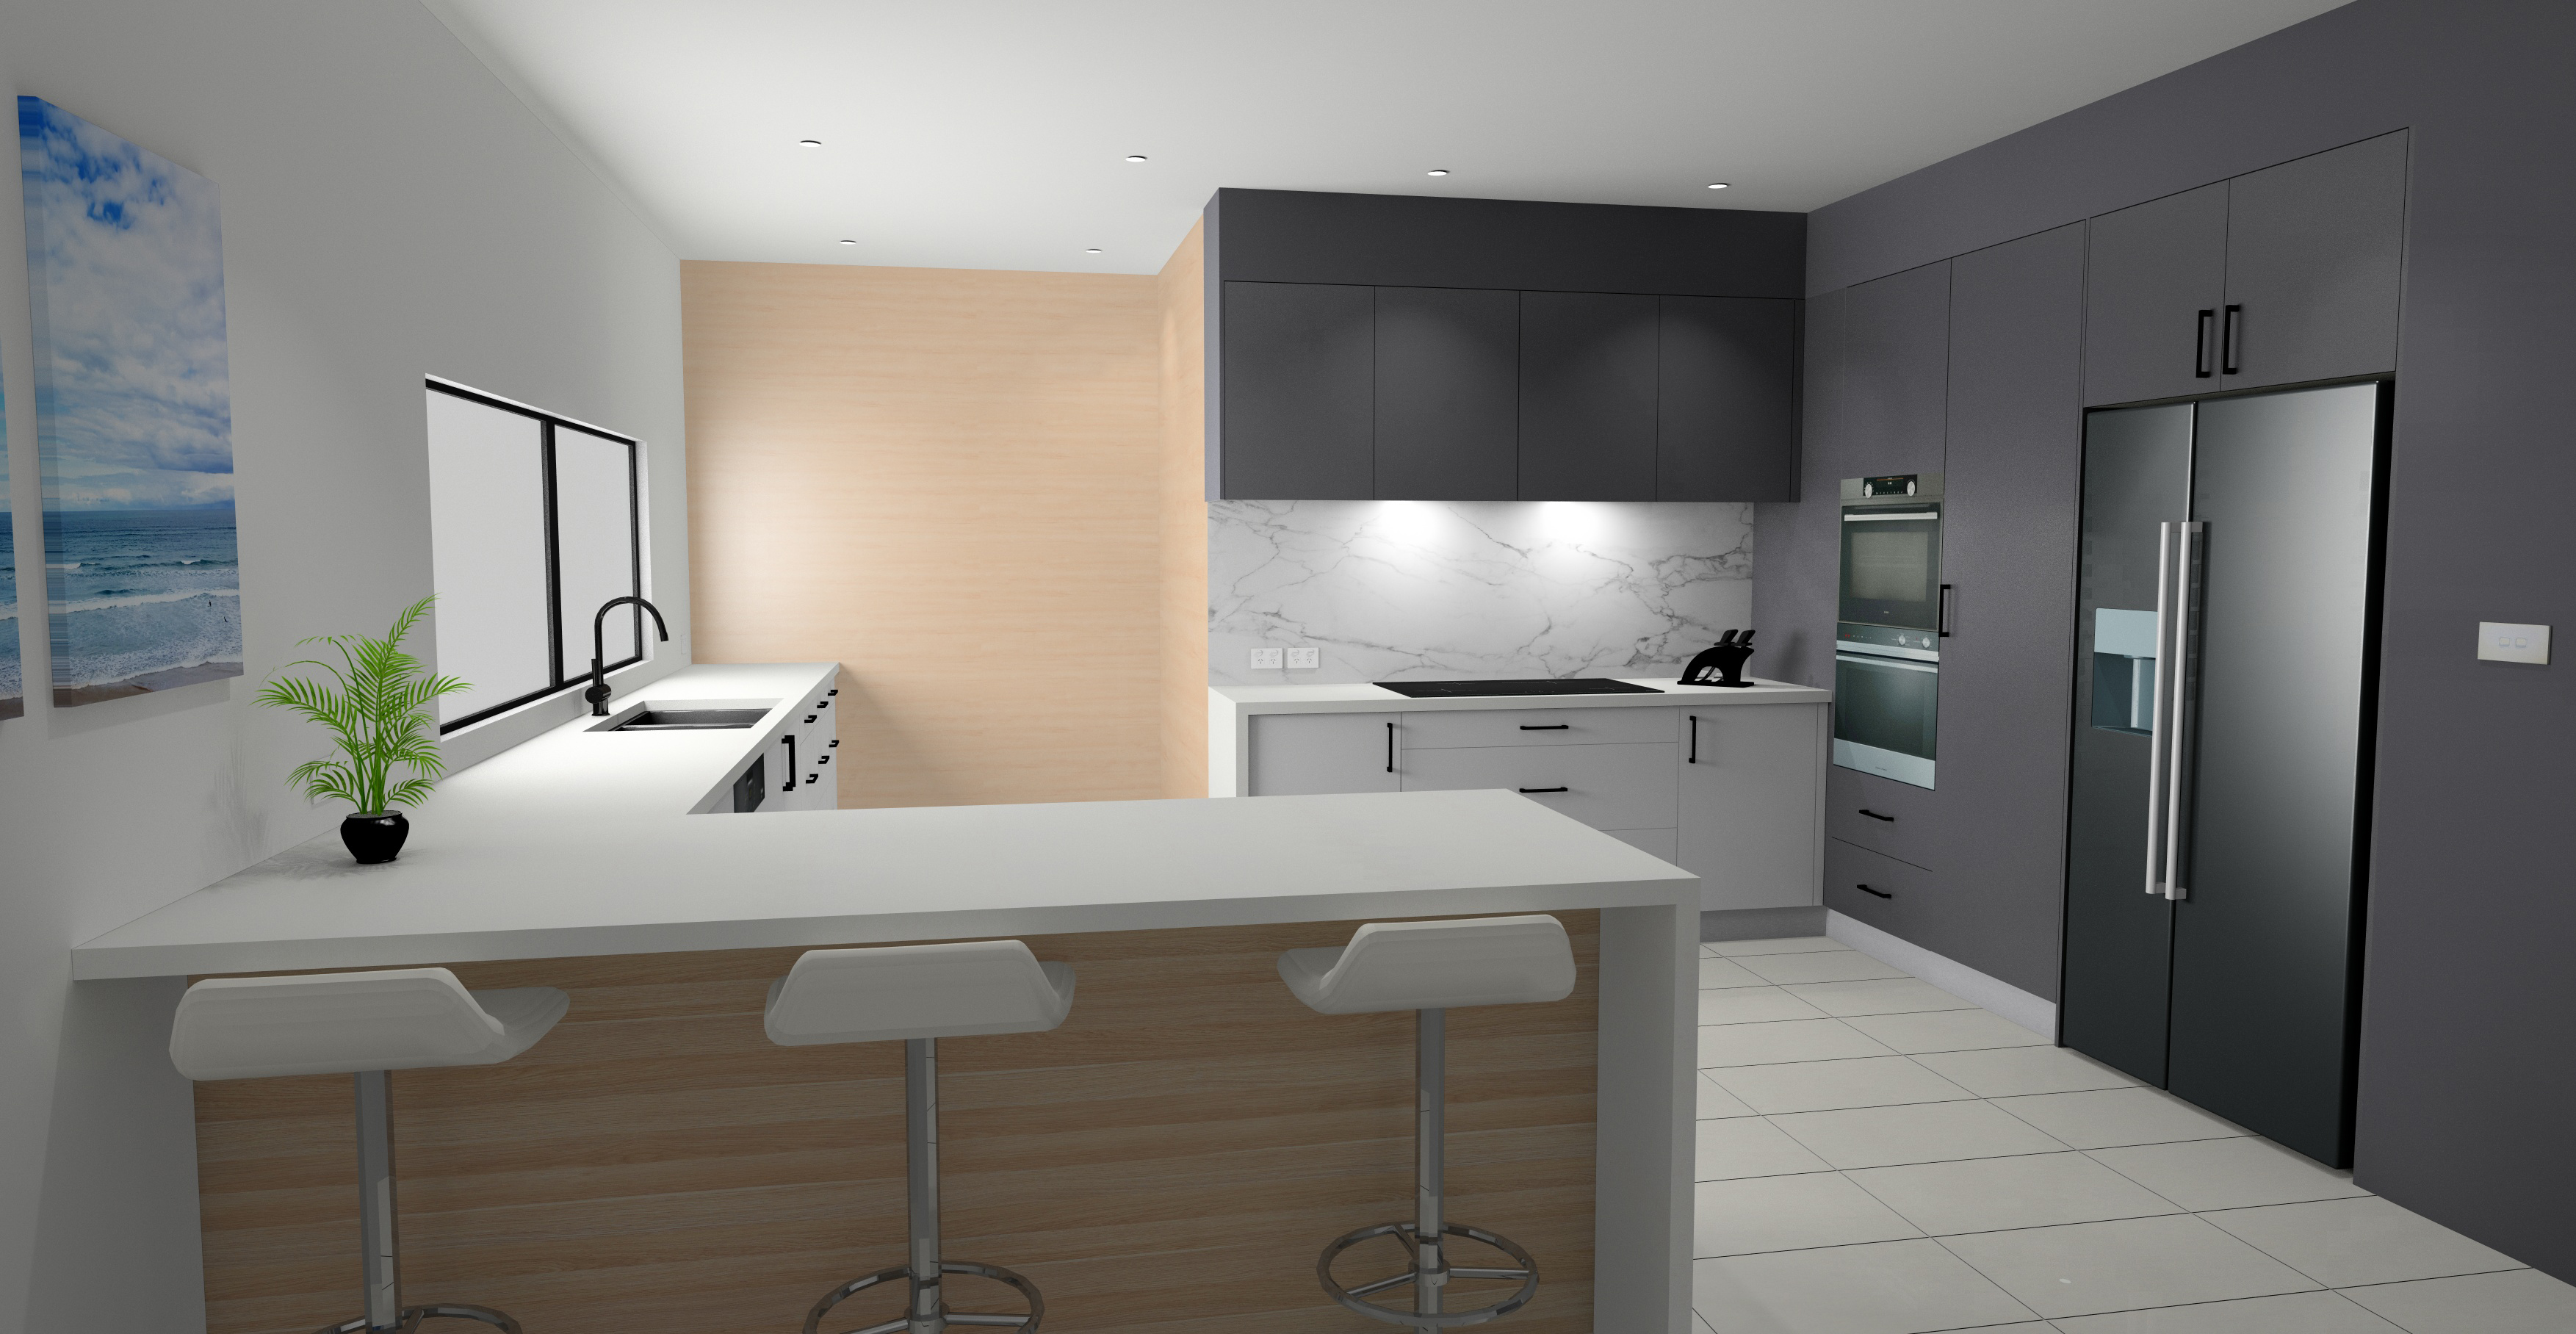 light wood and black cabinet kitchen render KD Max